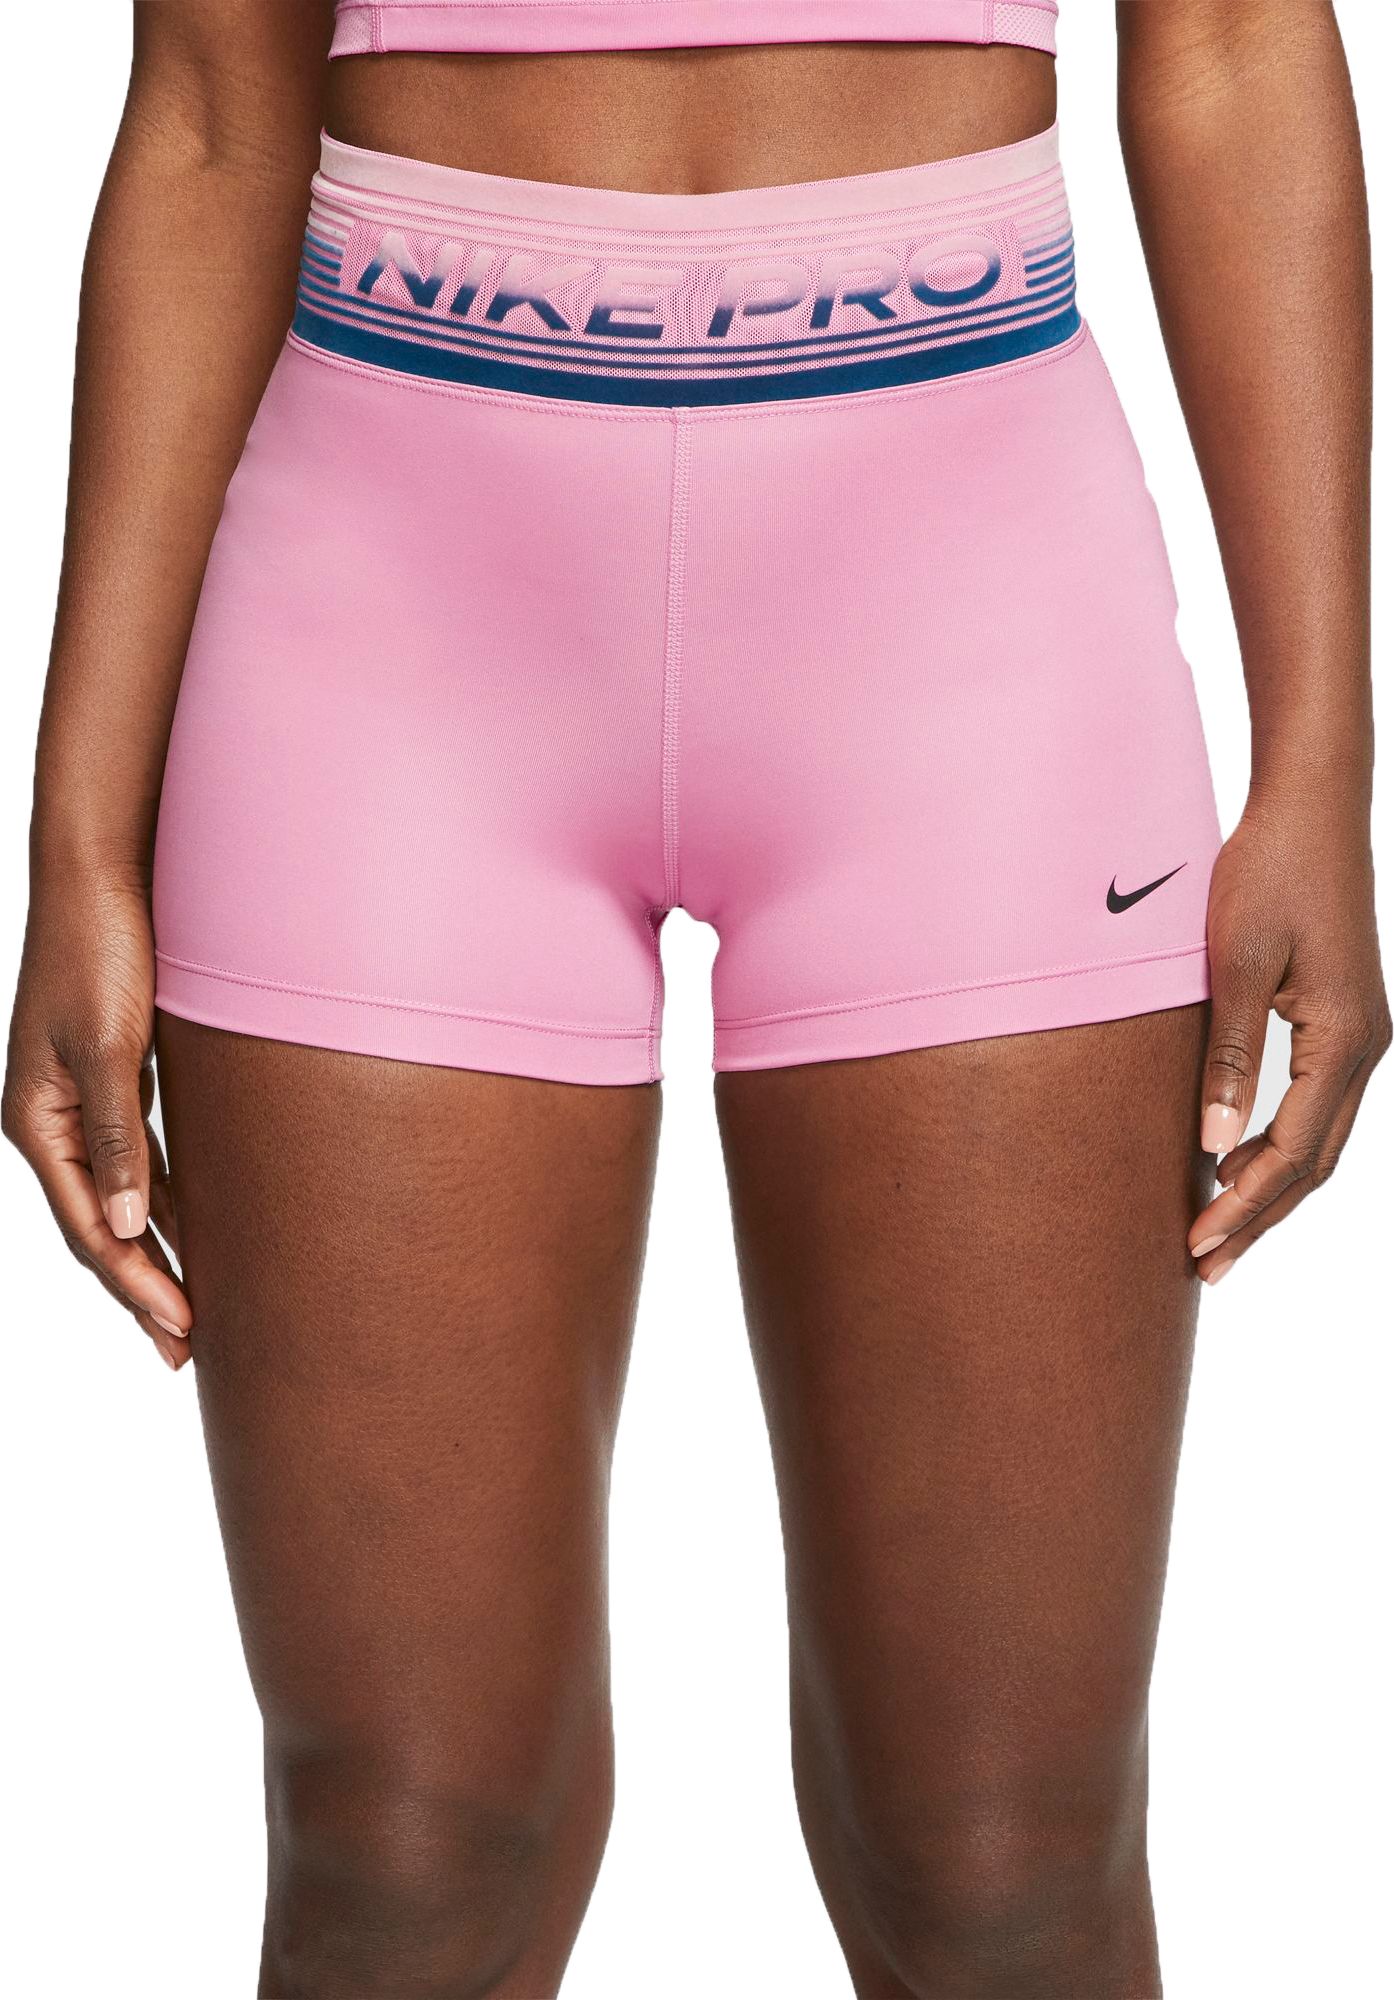 pink nike spandex shorts